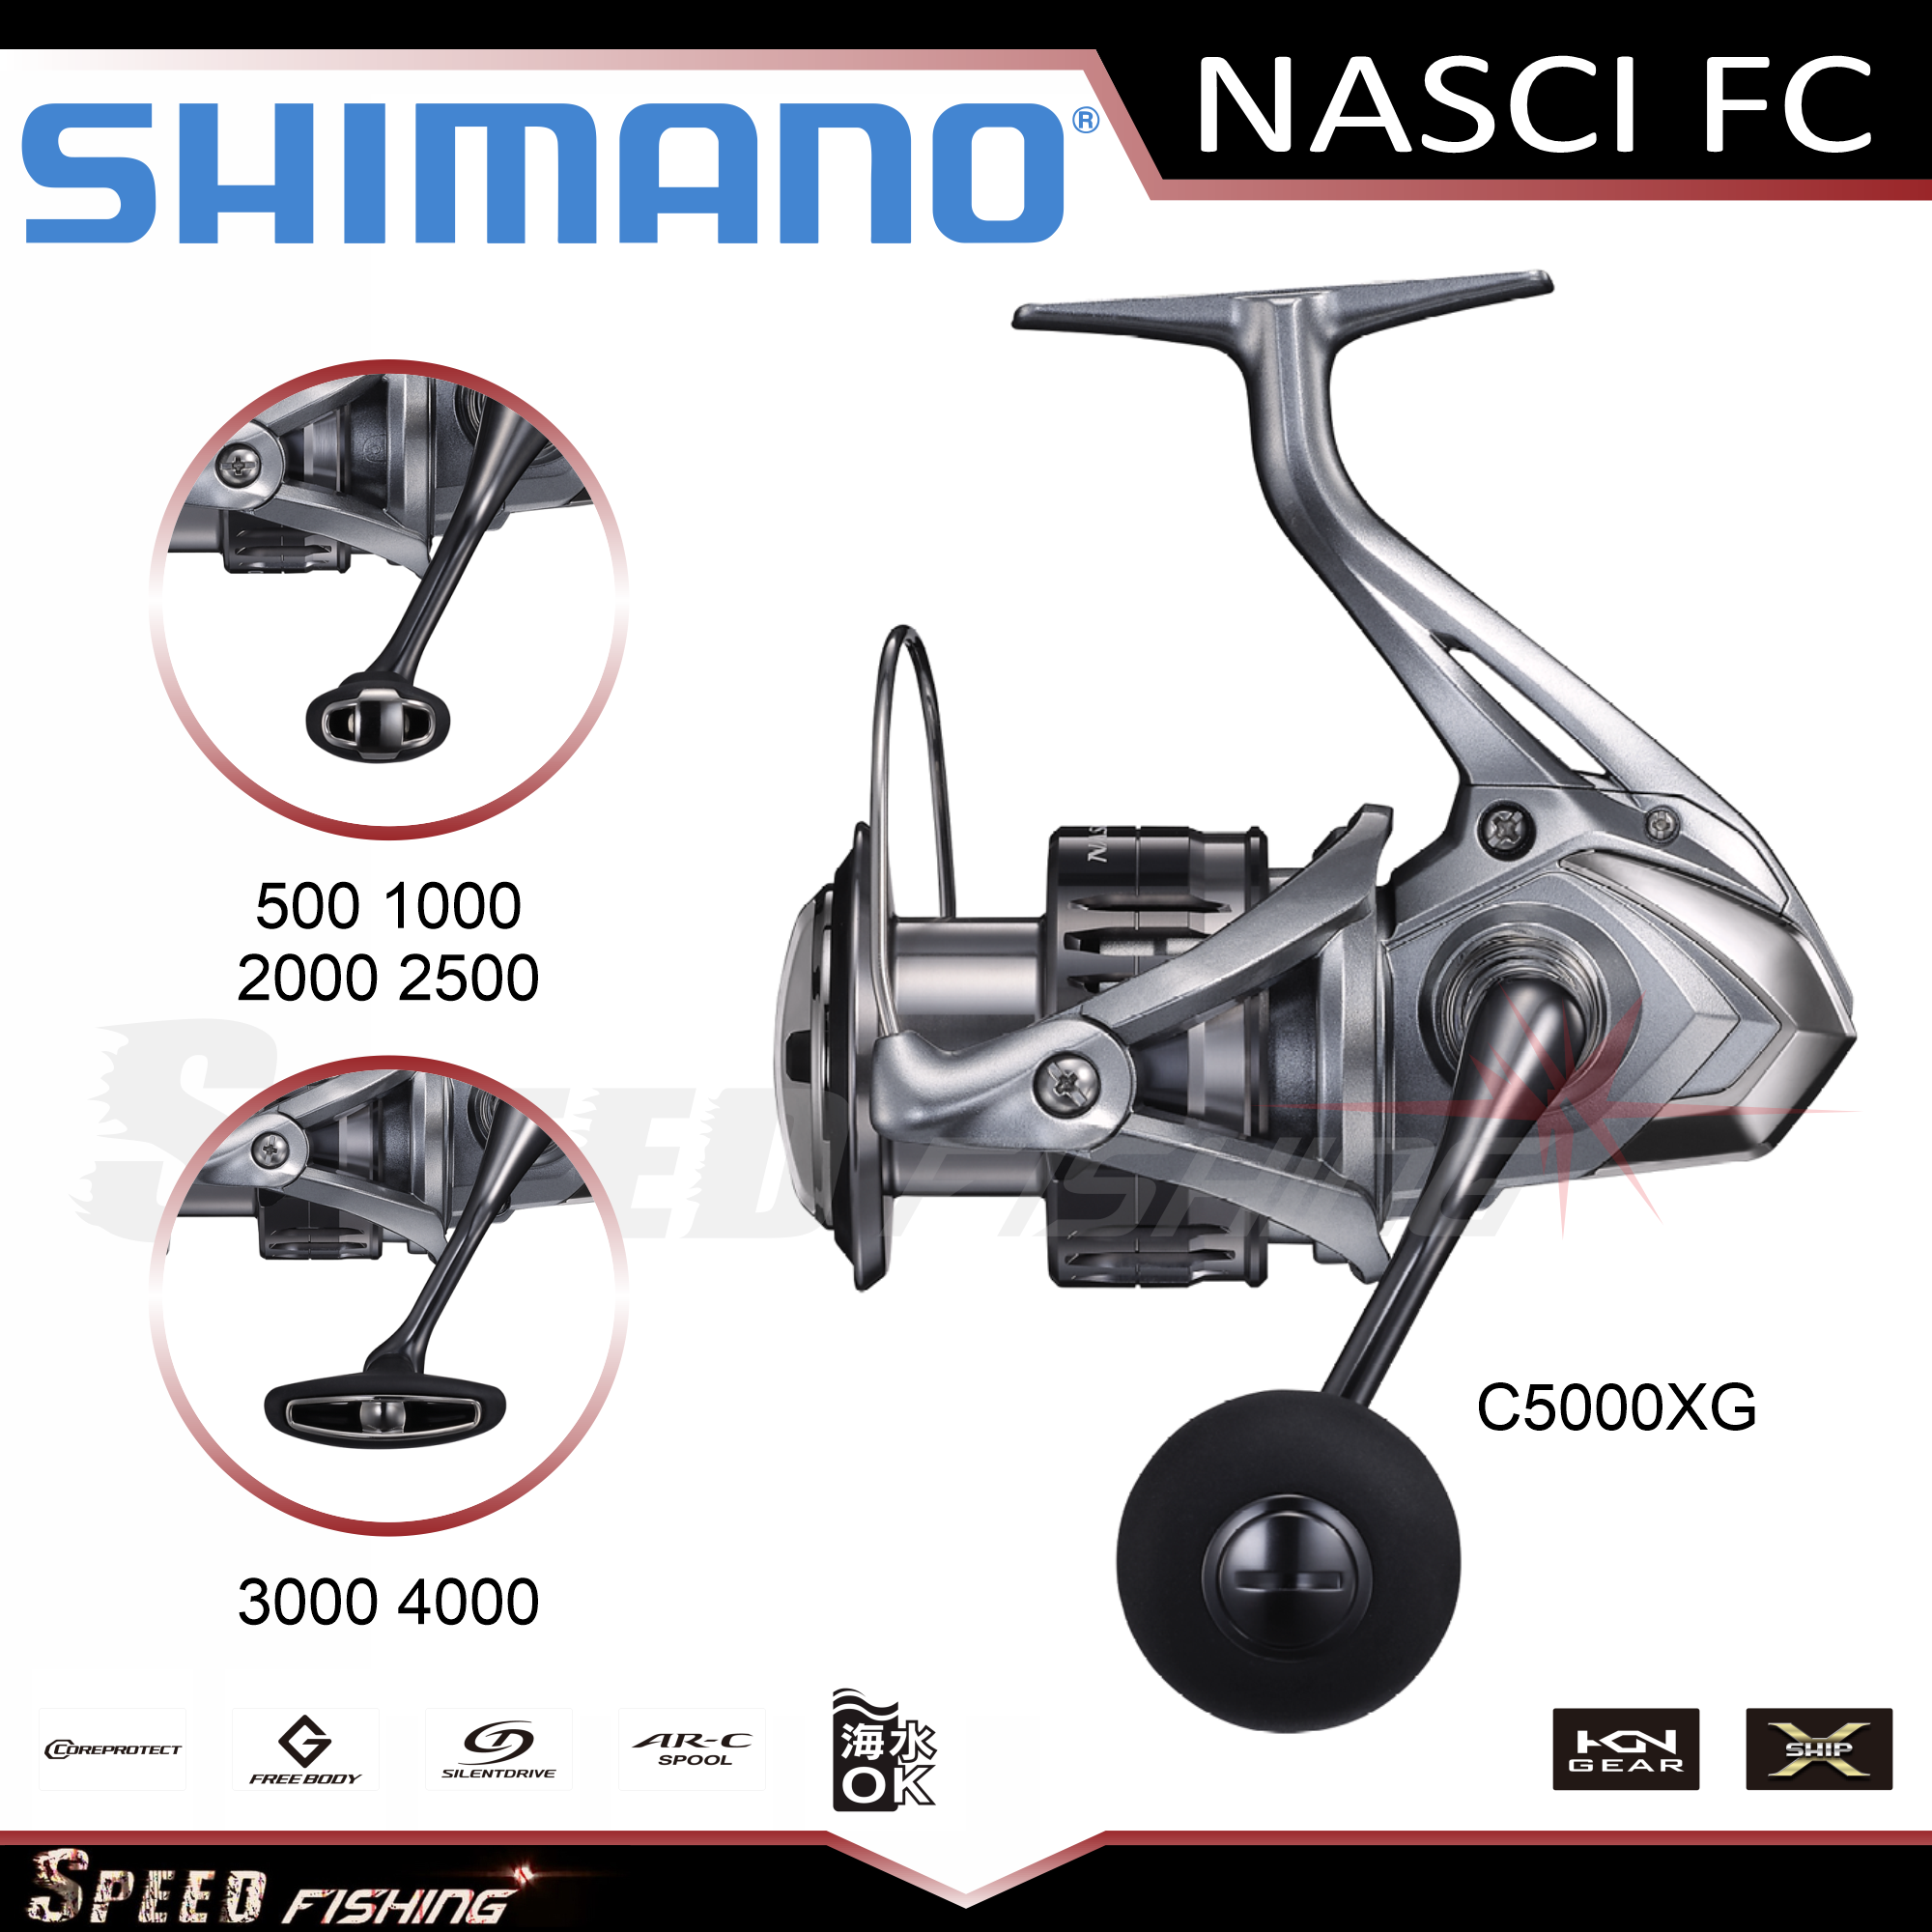 2000 Shimano Nasci FC - 4000 Spinning Reel